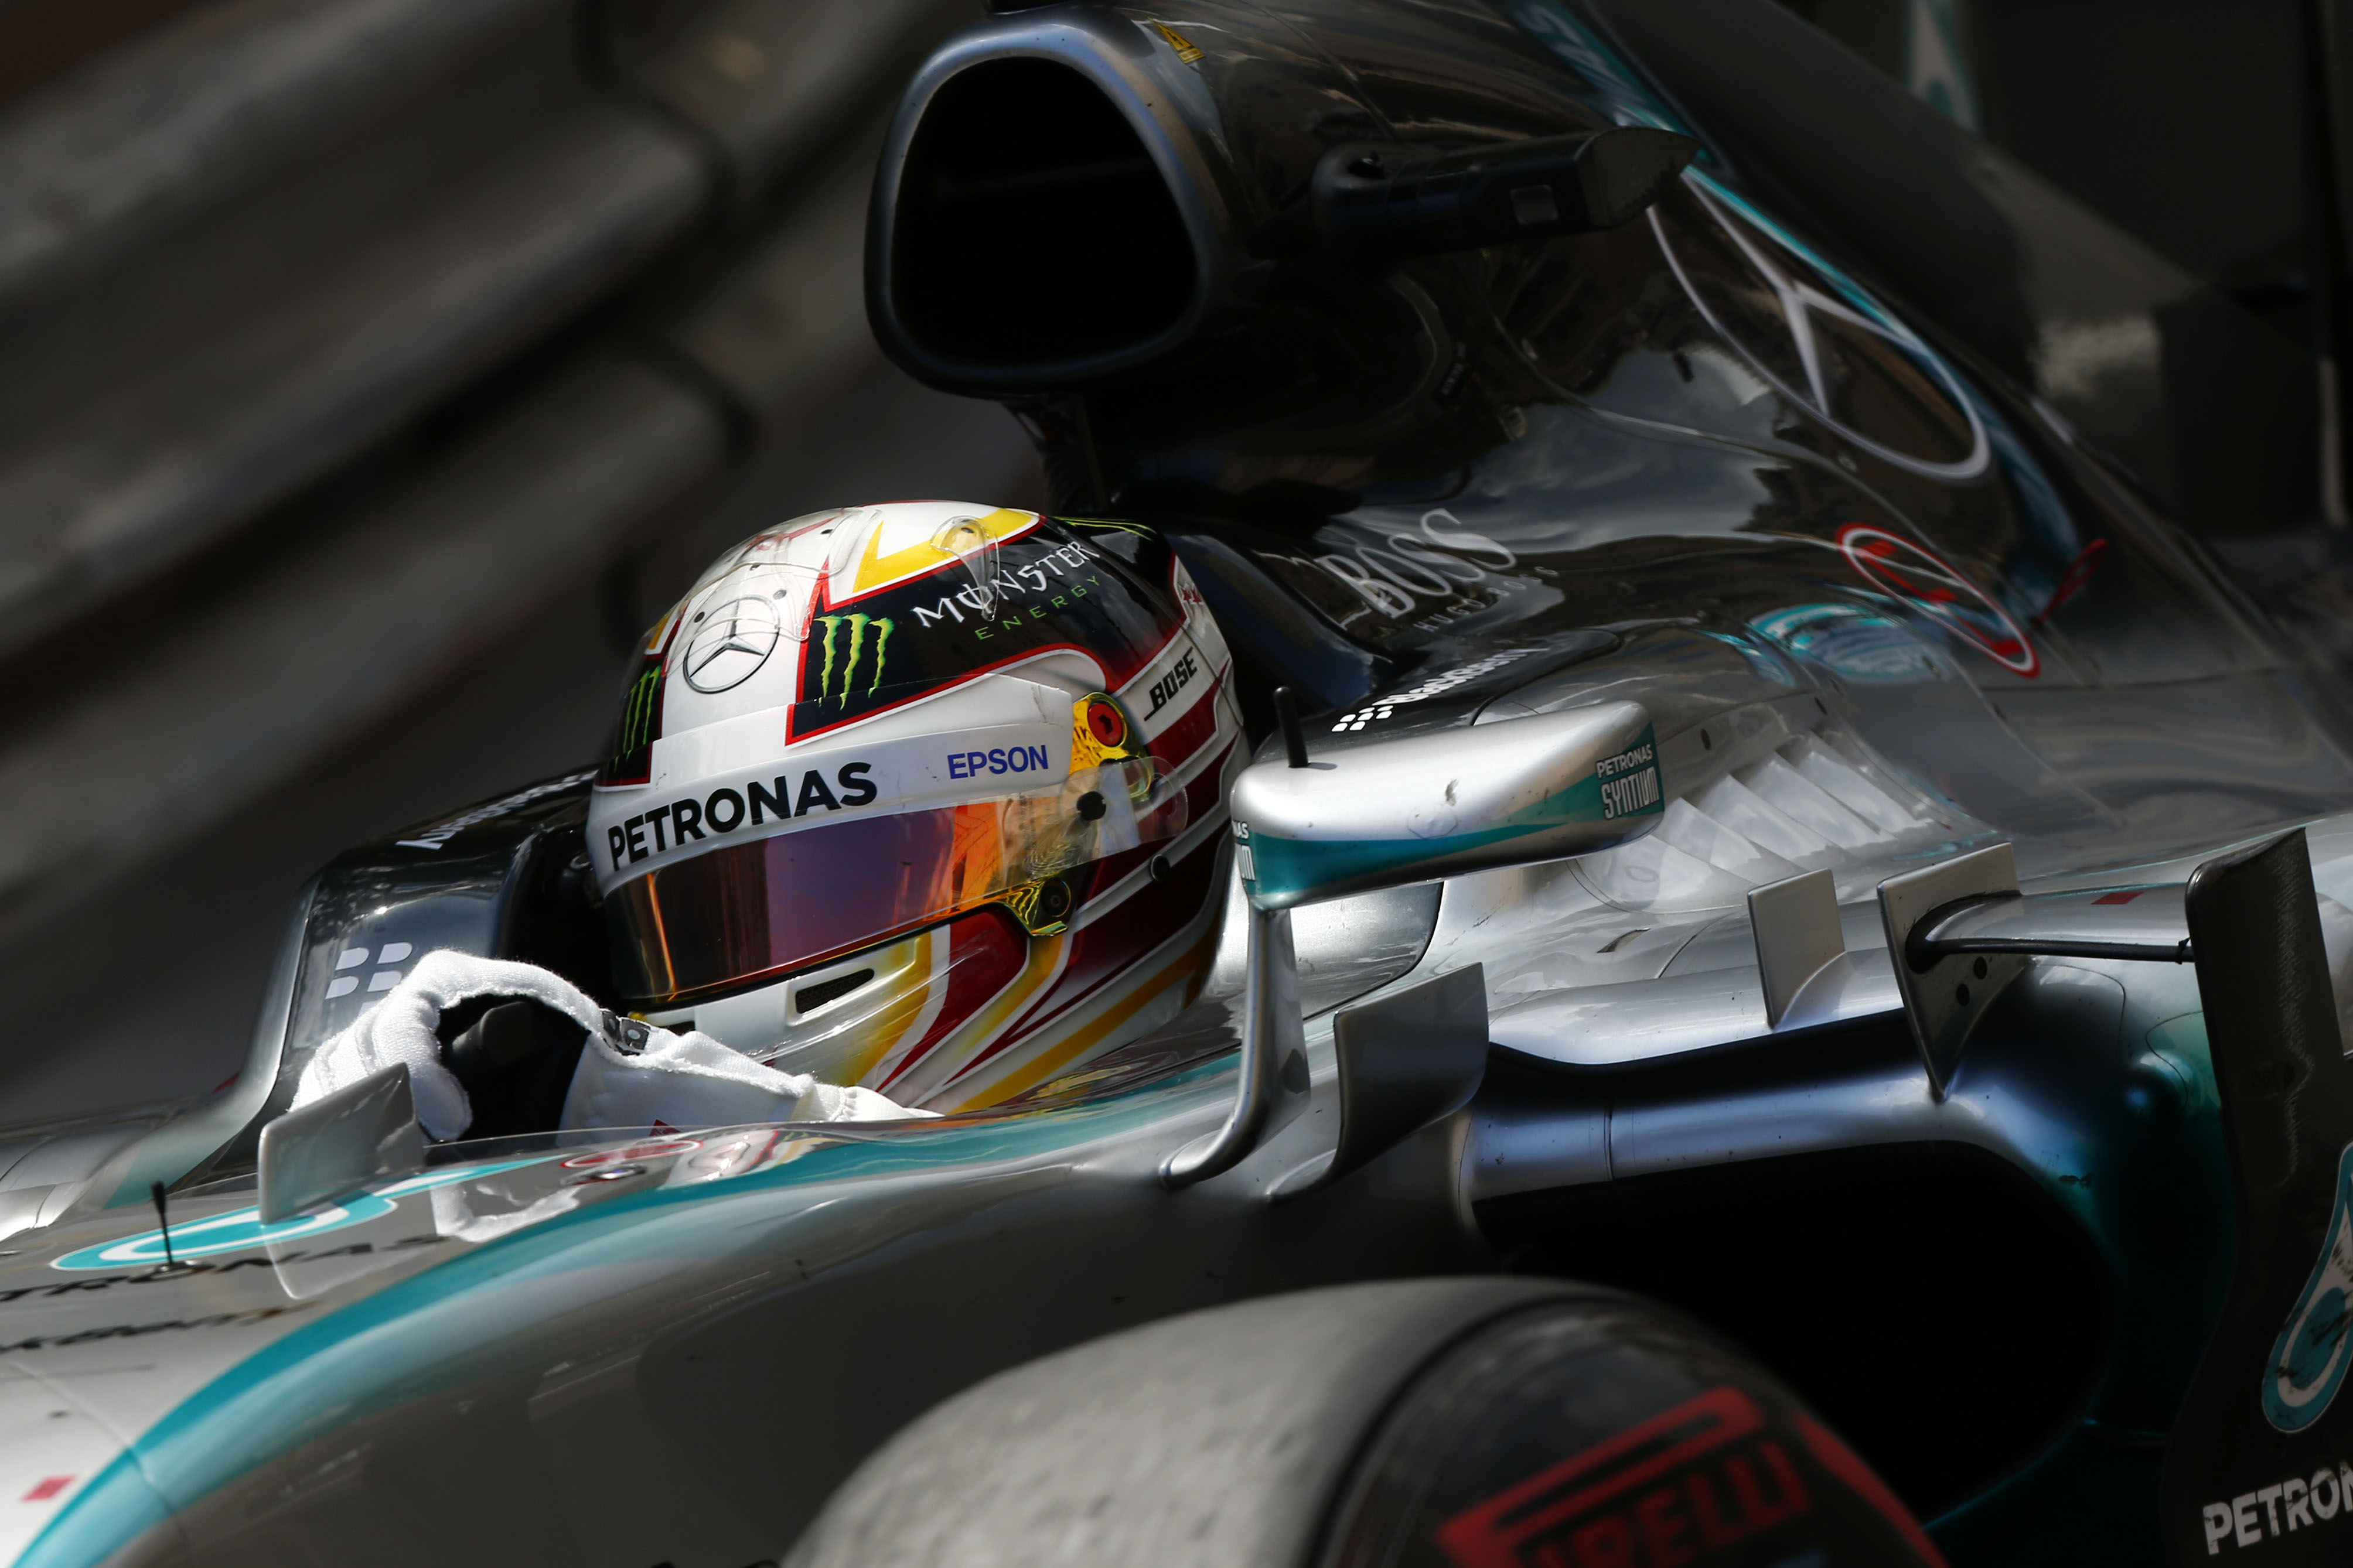 Epson, socio oficial de la escudería de Formula 1 Mercedes AMG Petronas